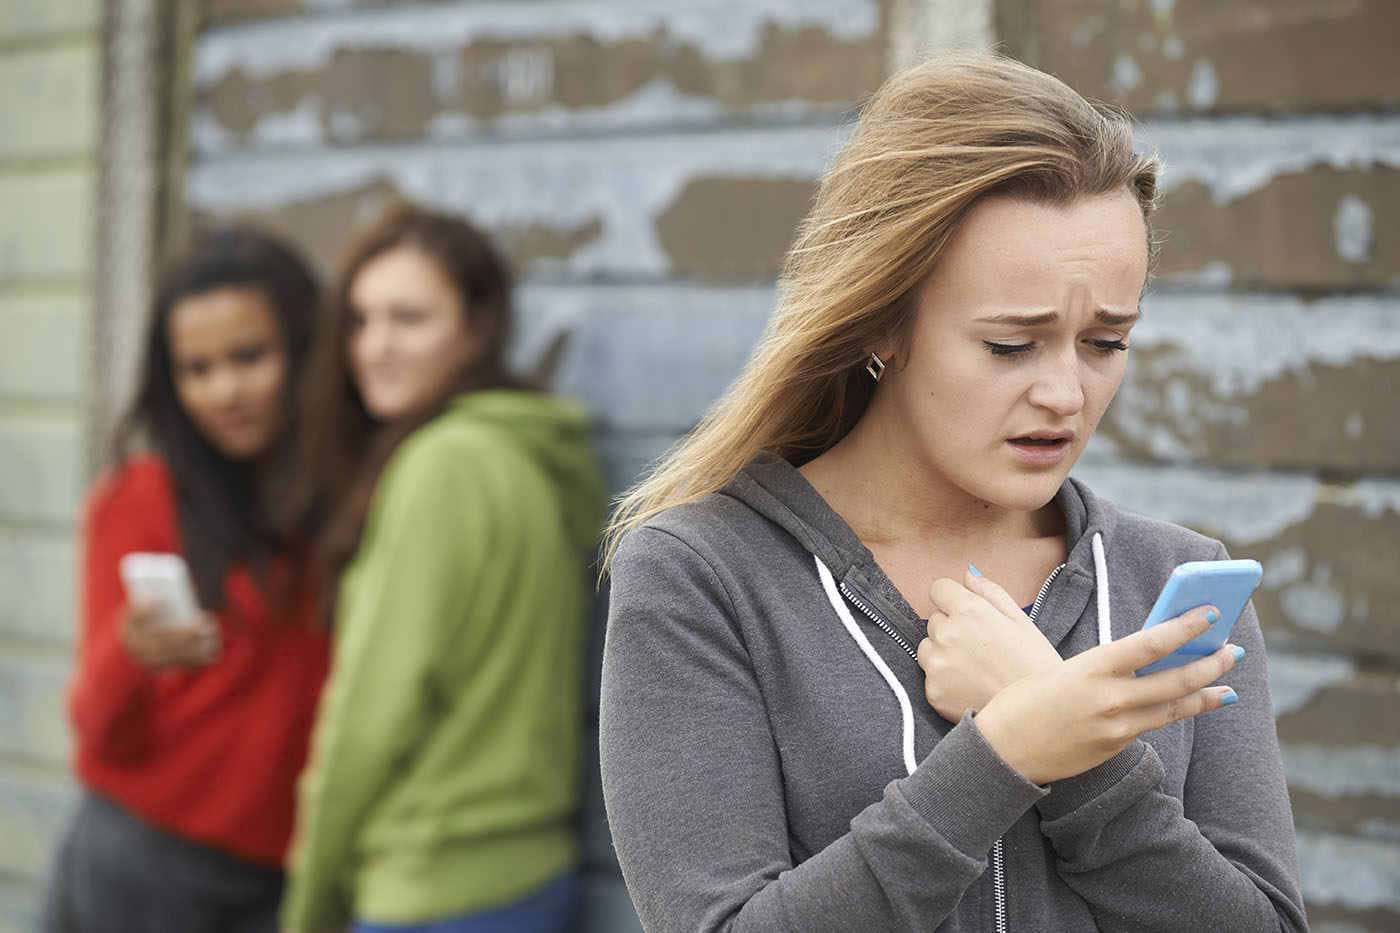 Cyberbullying-ul, asociat cu stres post-traumatic la adolescenți [studiu]